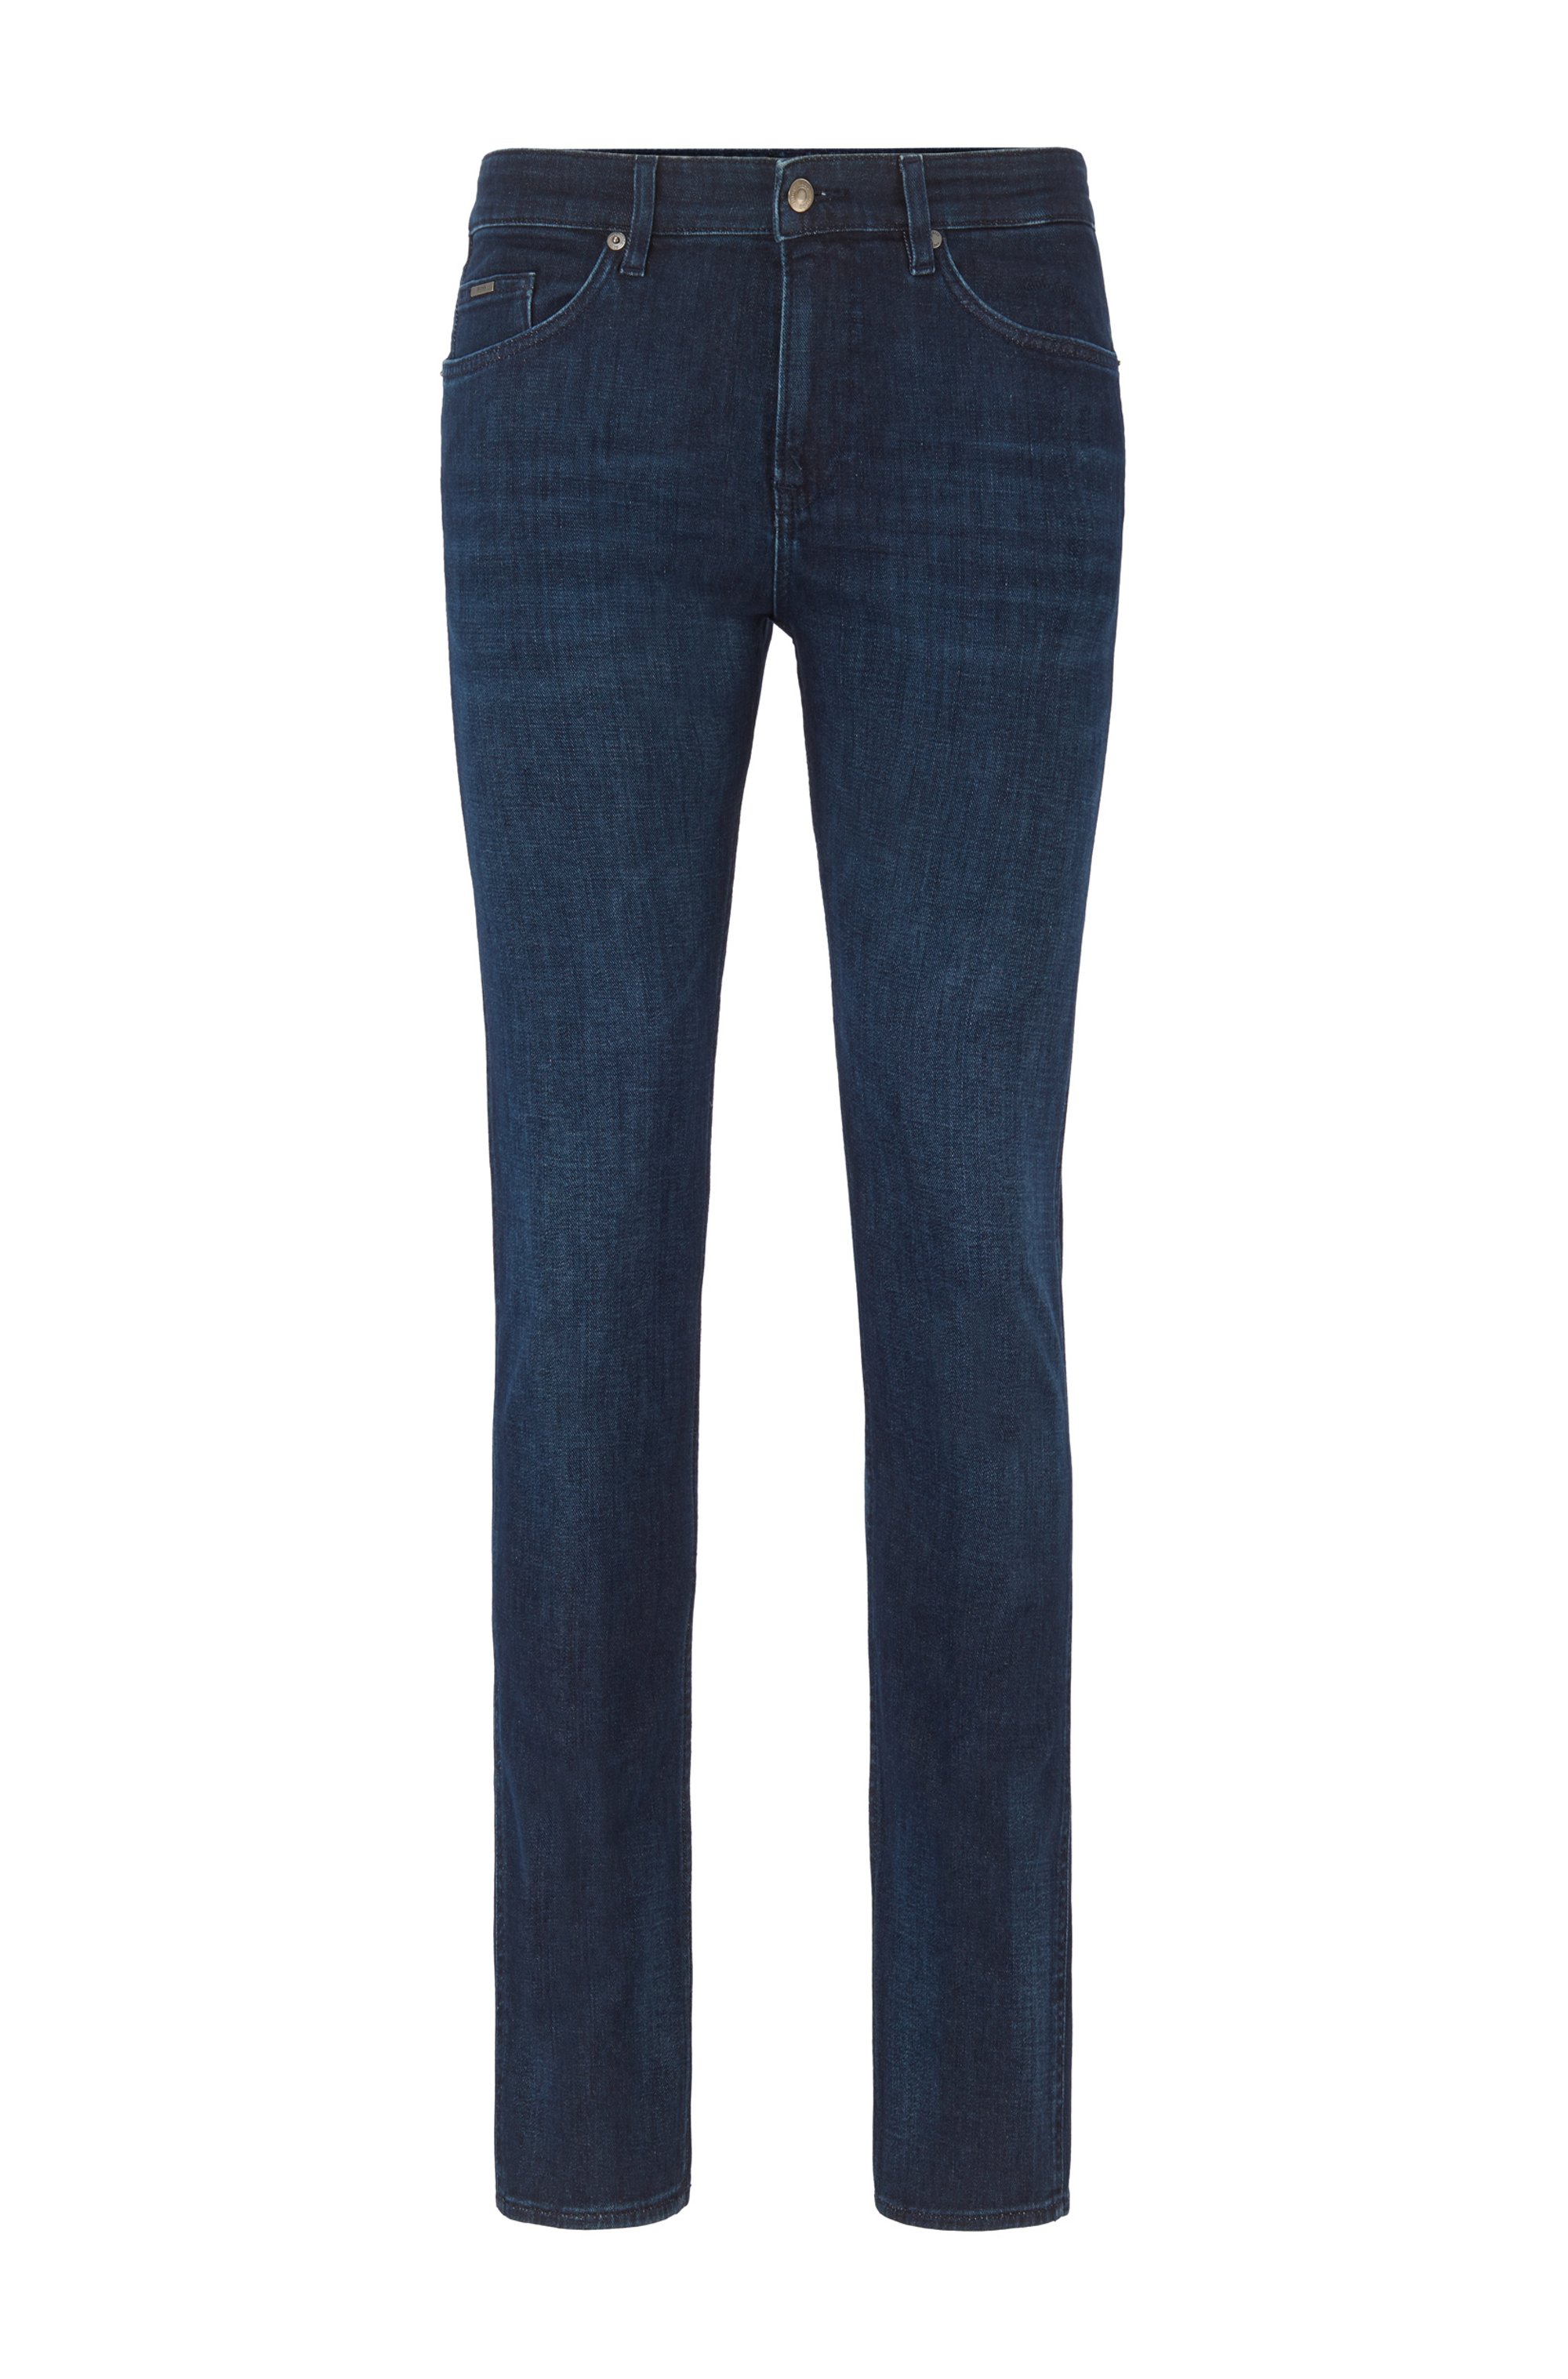 Slim-fit jeans in cashmere-touch blue Italian denim, Dark Blue